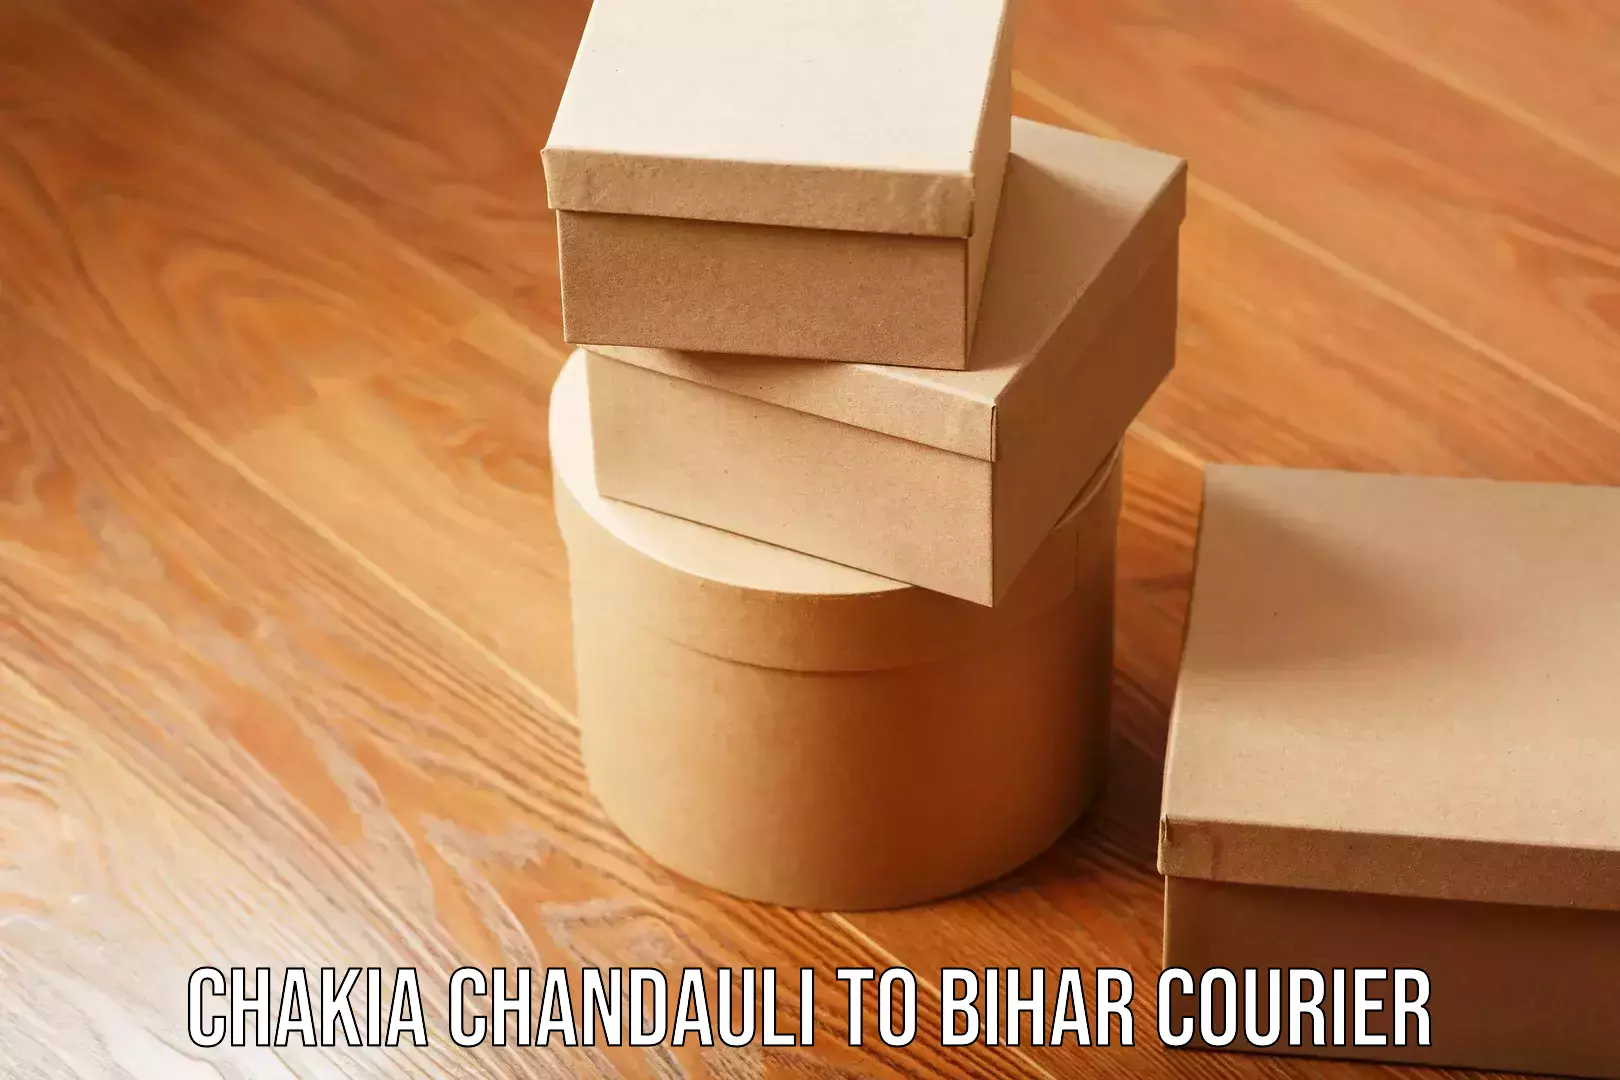 Nationwide parcel services Chakia Chandauli to Bihar